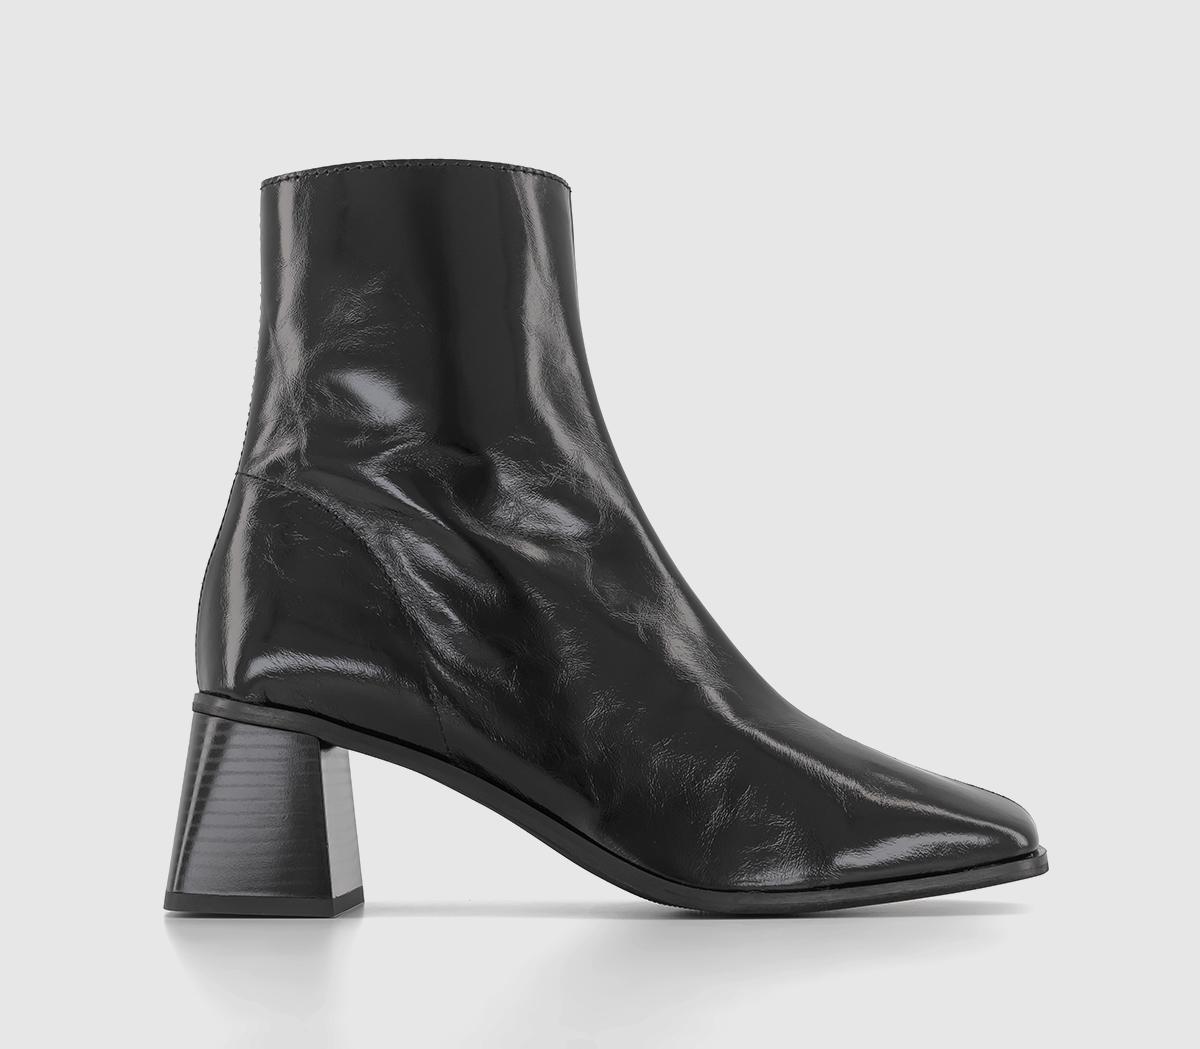 Addison Patent Leather Block Heel Boots Black Patent Leather